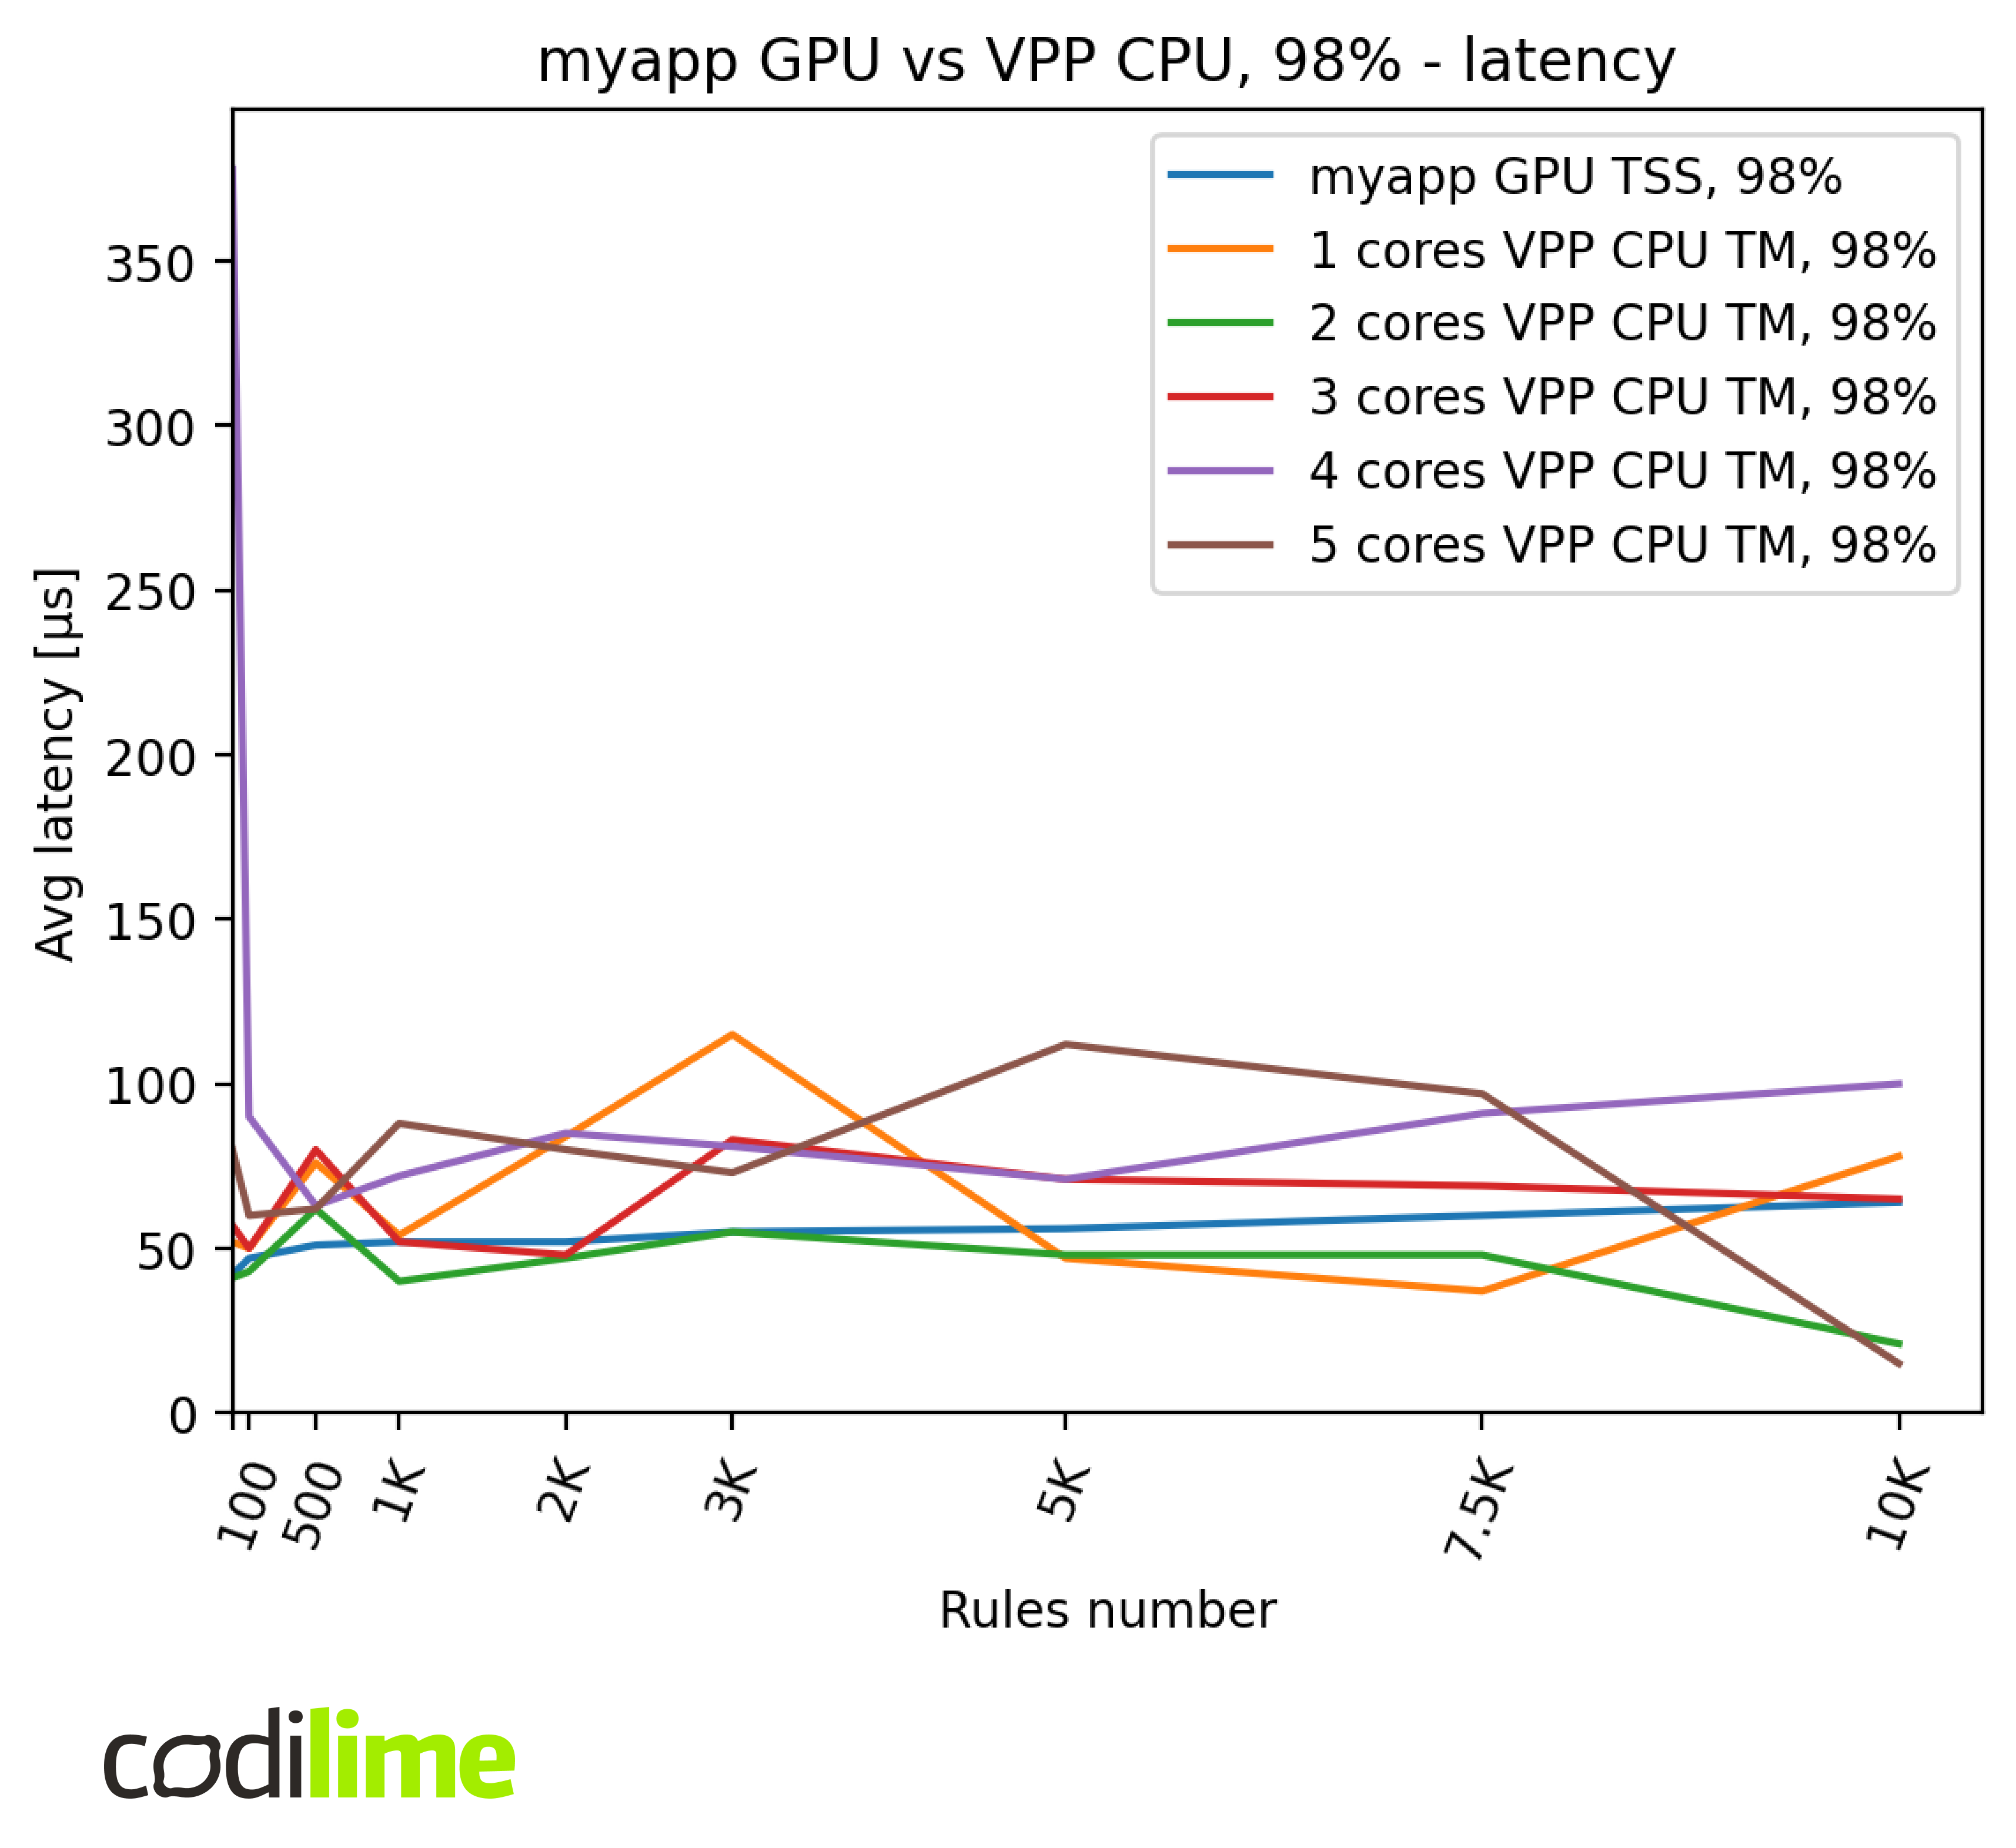 myapp GPU vs VPP CPU 98%, latency